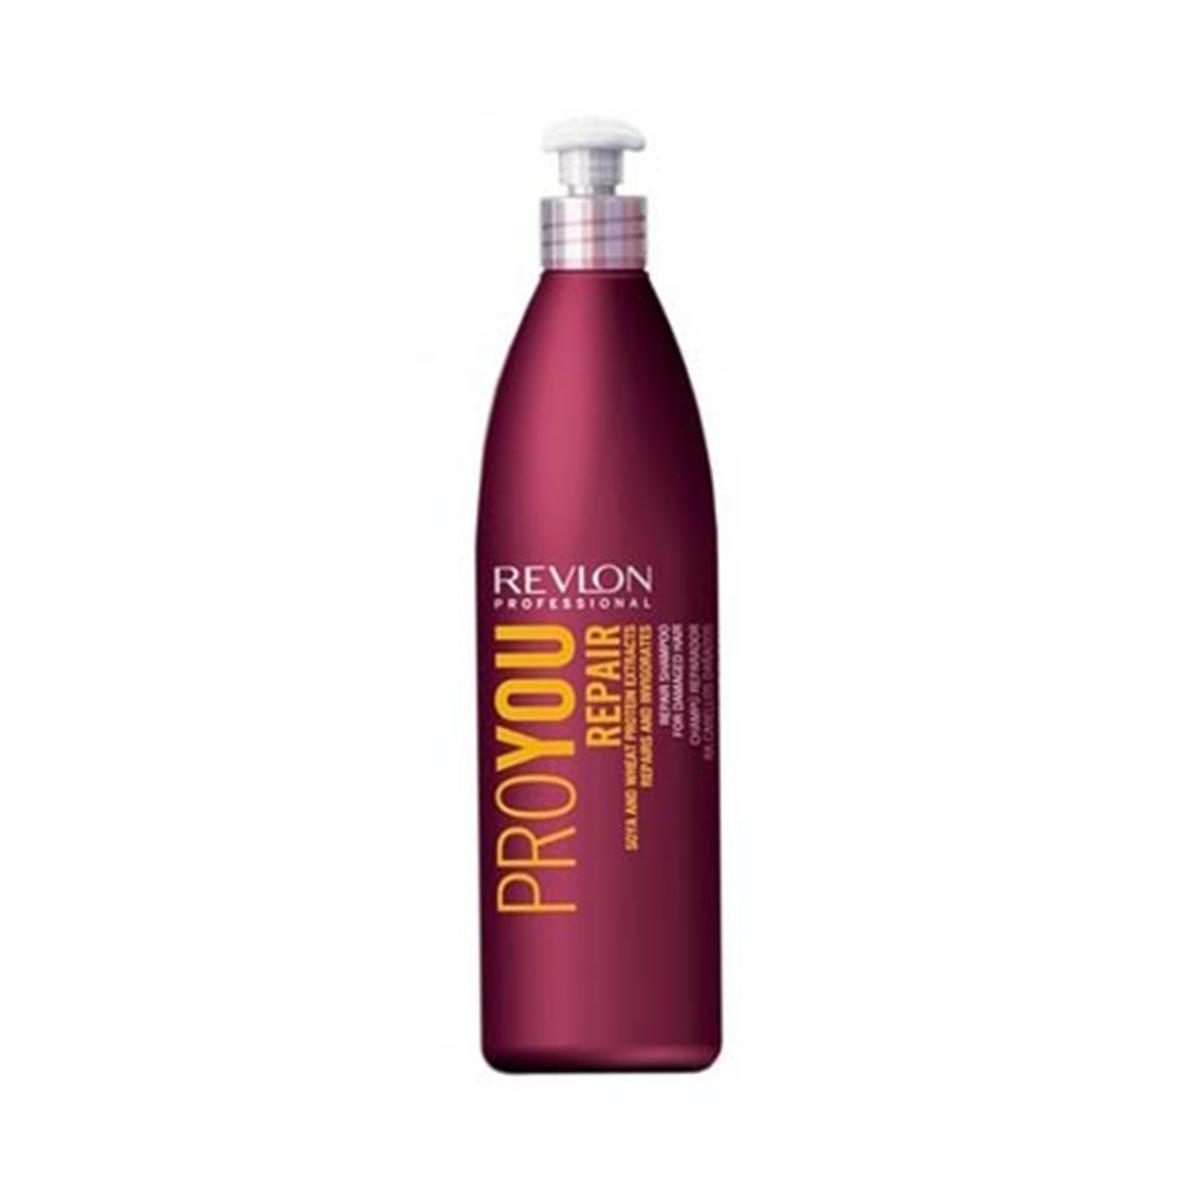 revlon-pro-you-shampoo-repair-350ml